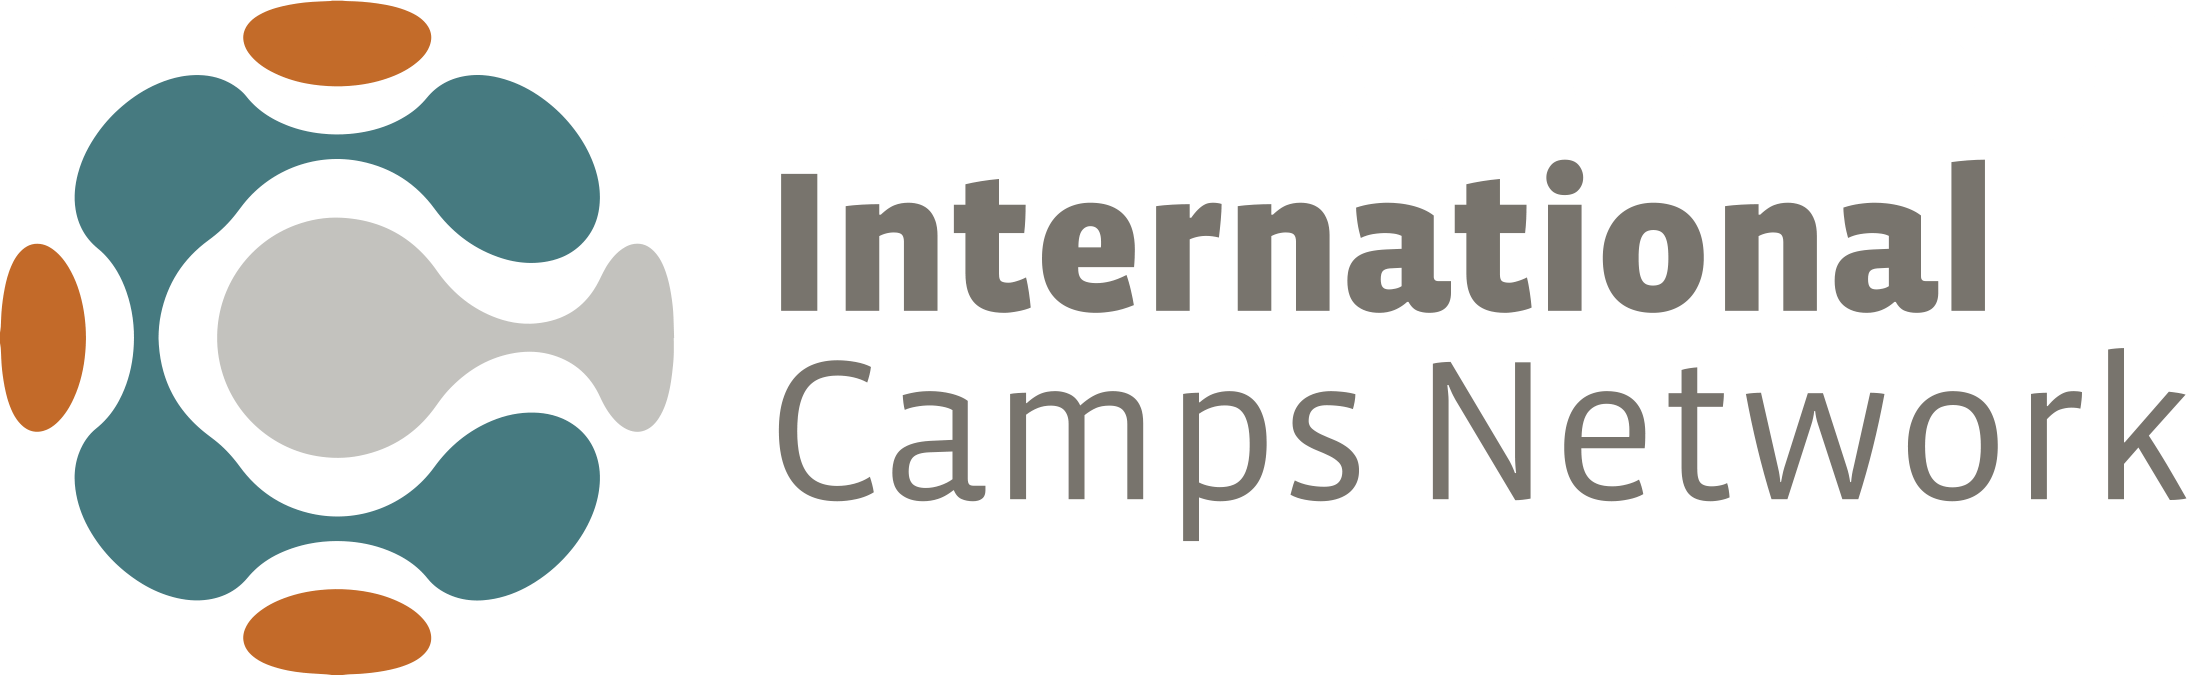 International Camps Network logo